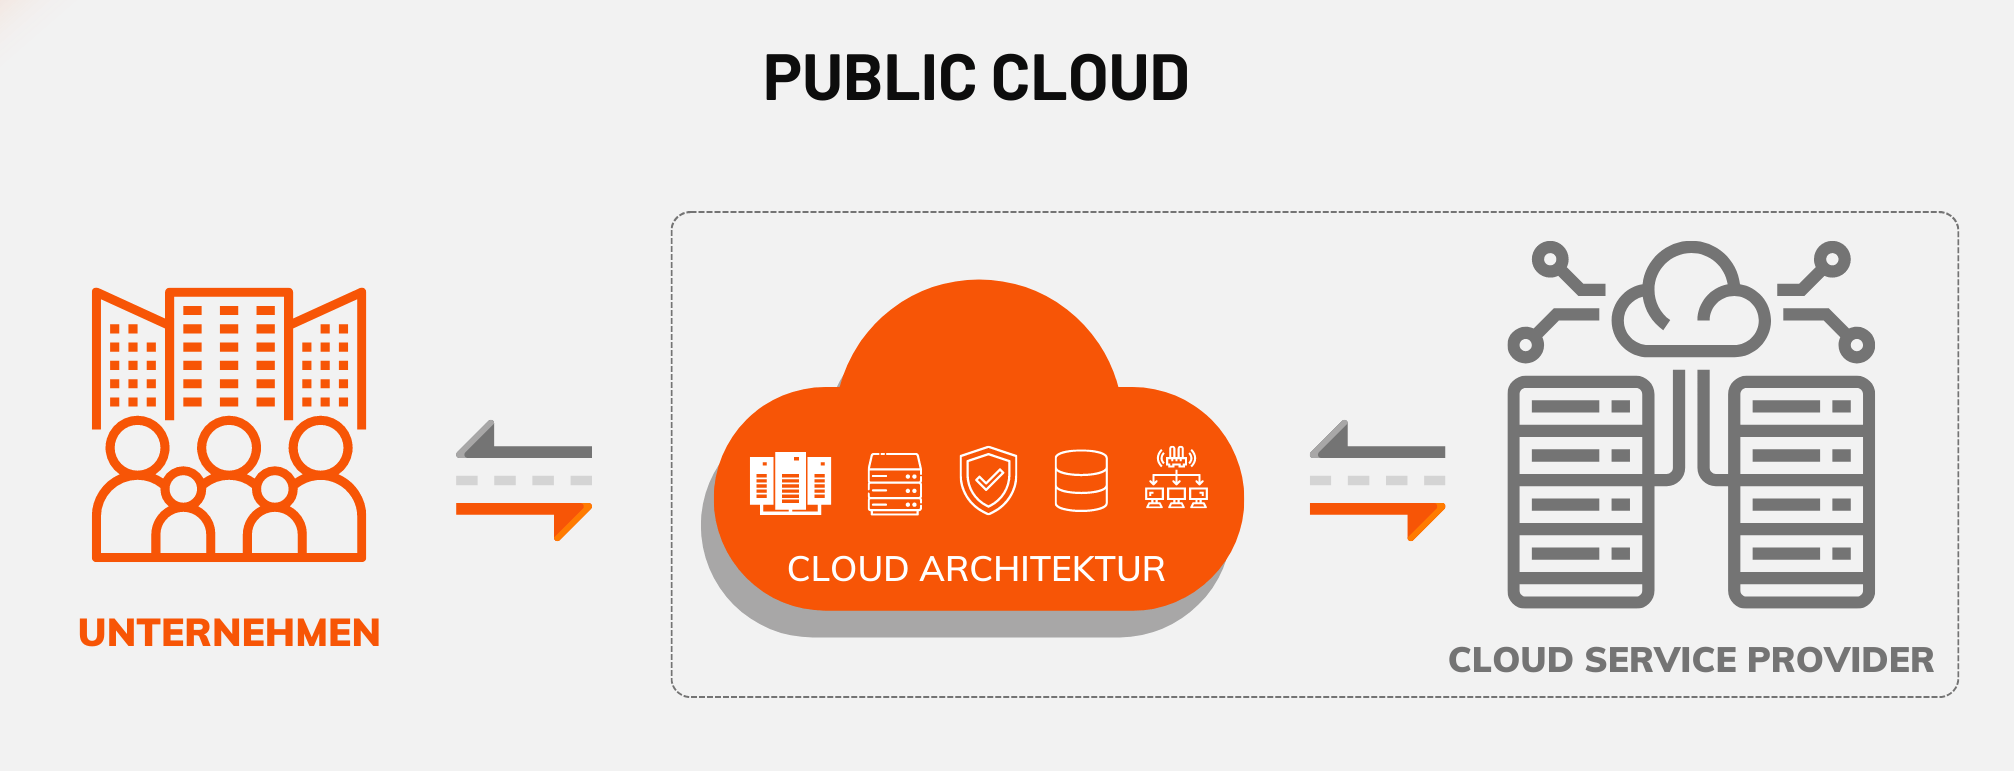 Public Cloud - Cloud Computing